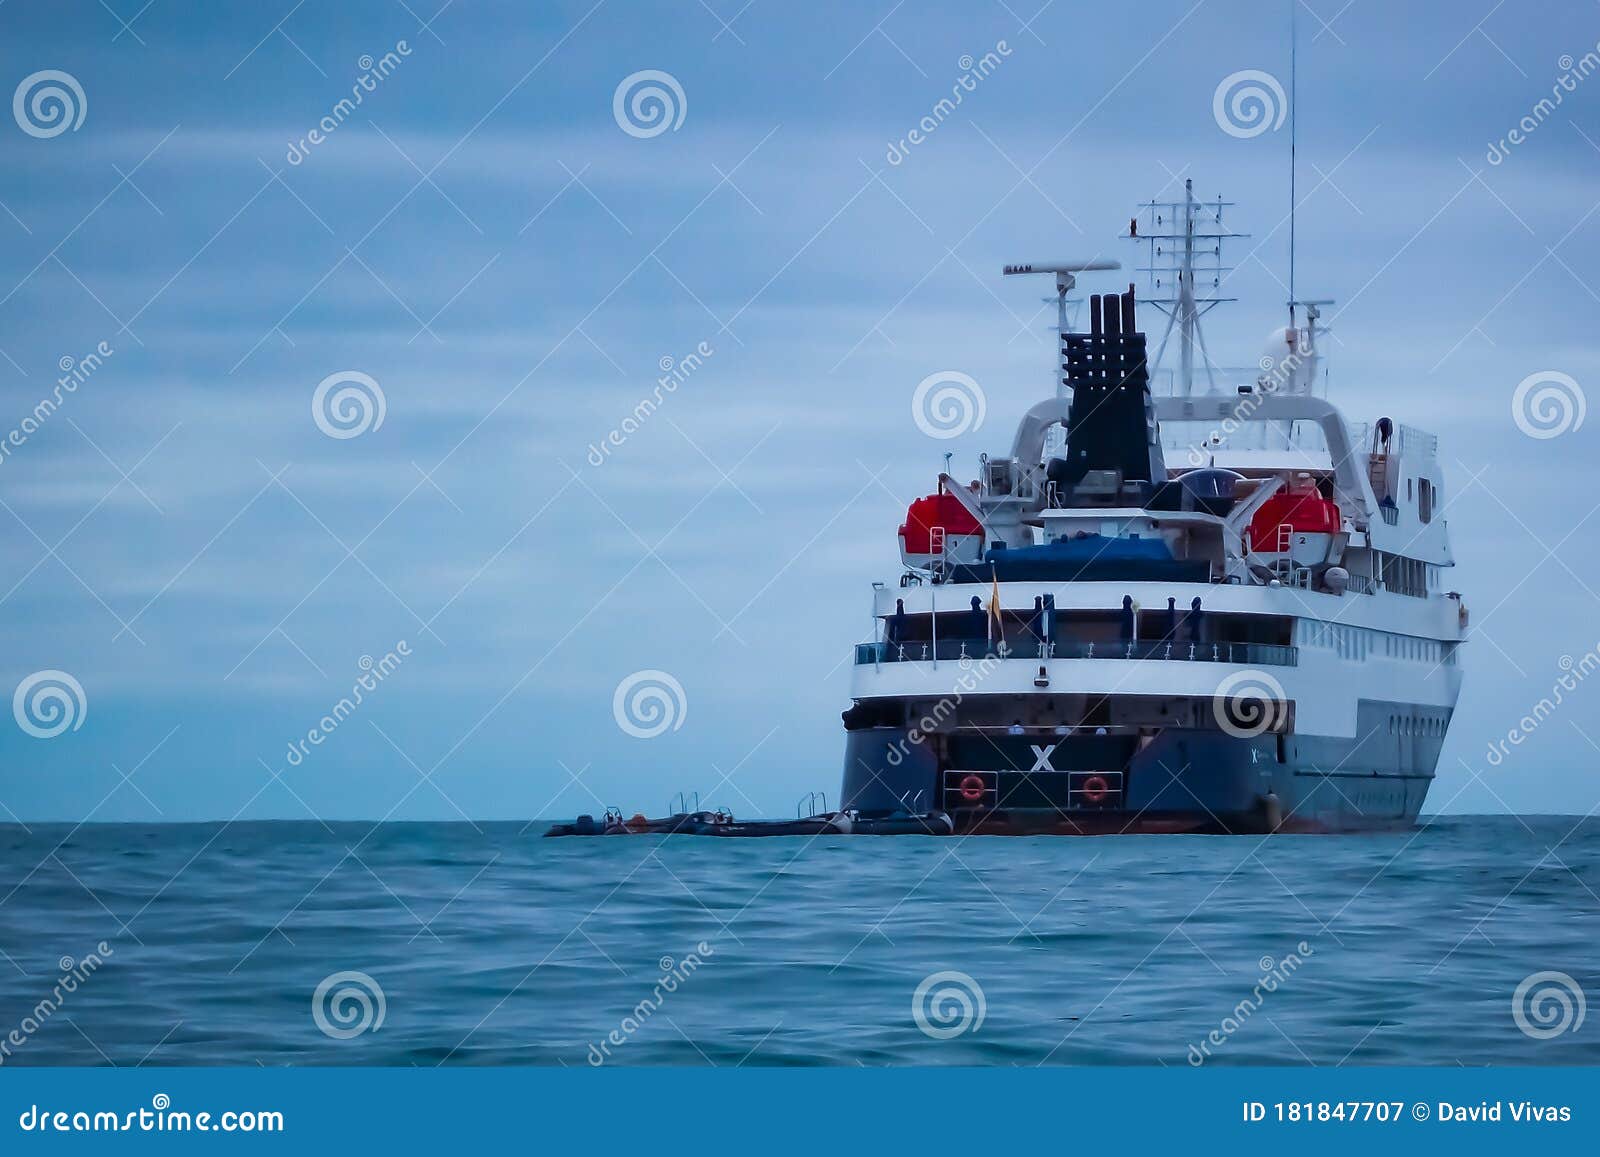 crucero en alta mar. barco de carga. transporte marÃÂ ÃÂ ÃâÃÂ ÃâÃâÃÂ­timo. galapagos - ecuador.